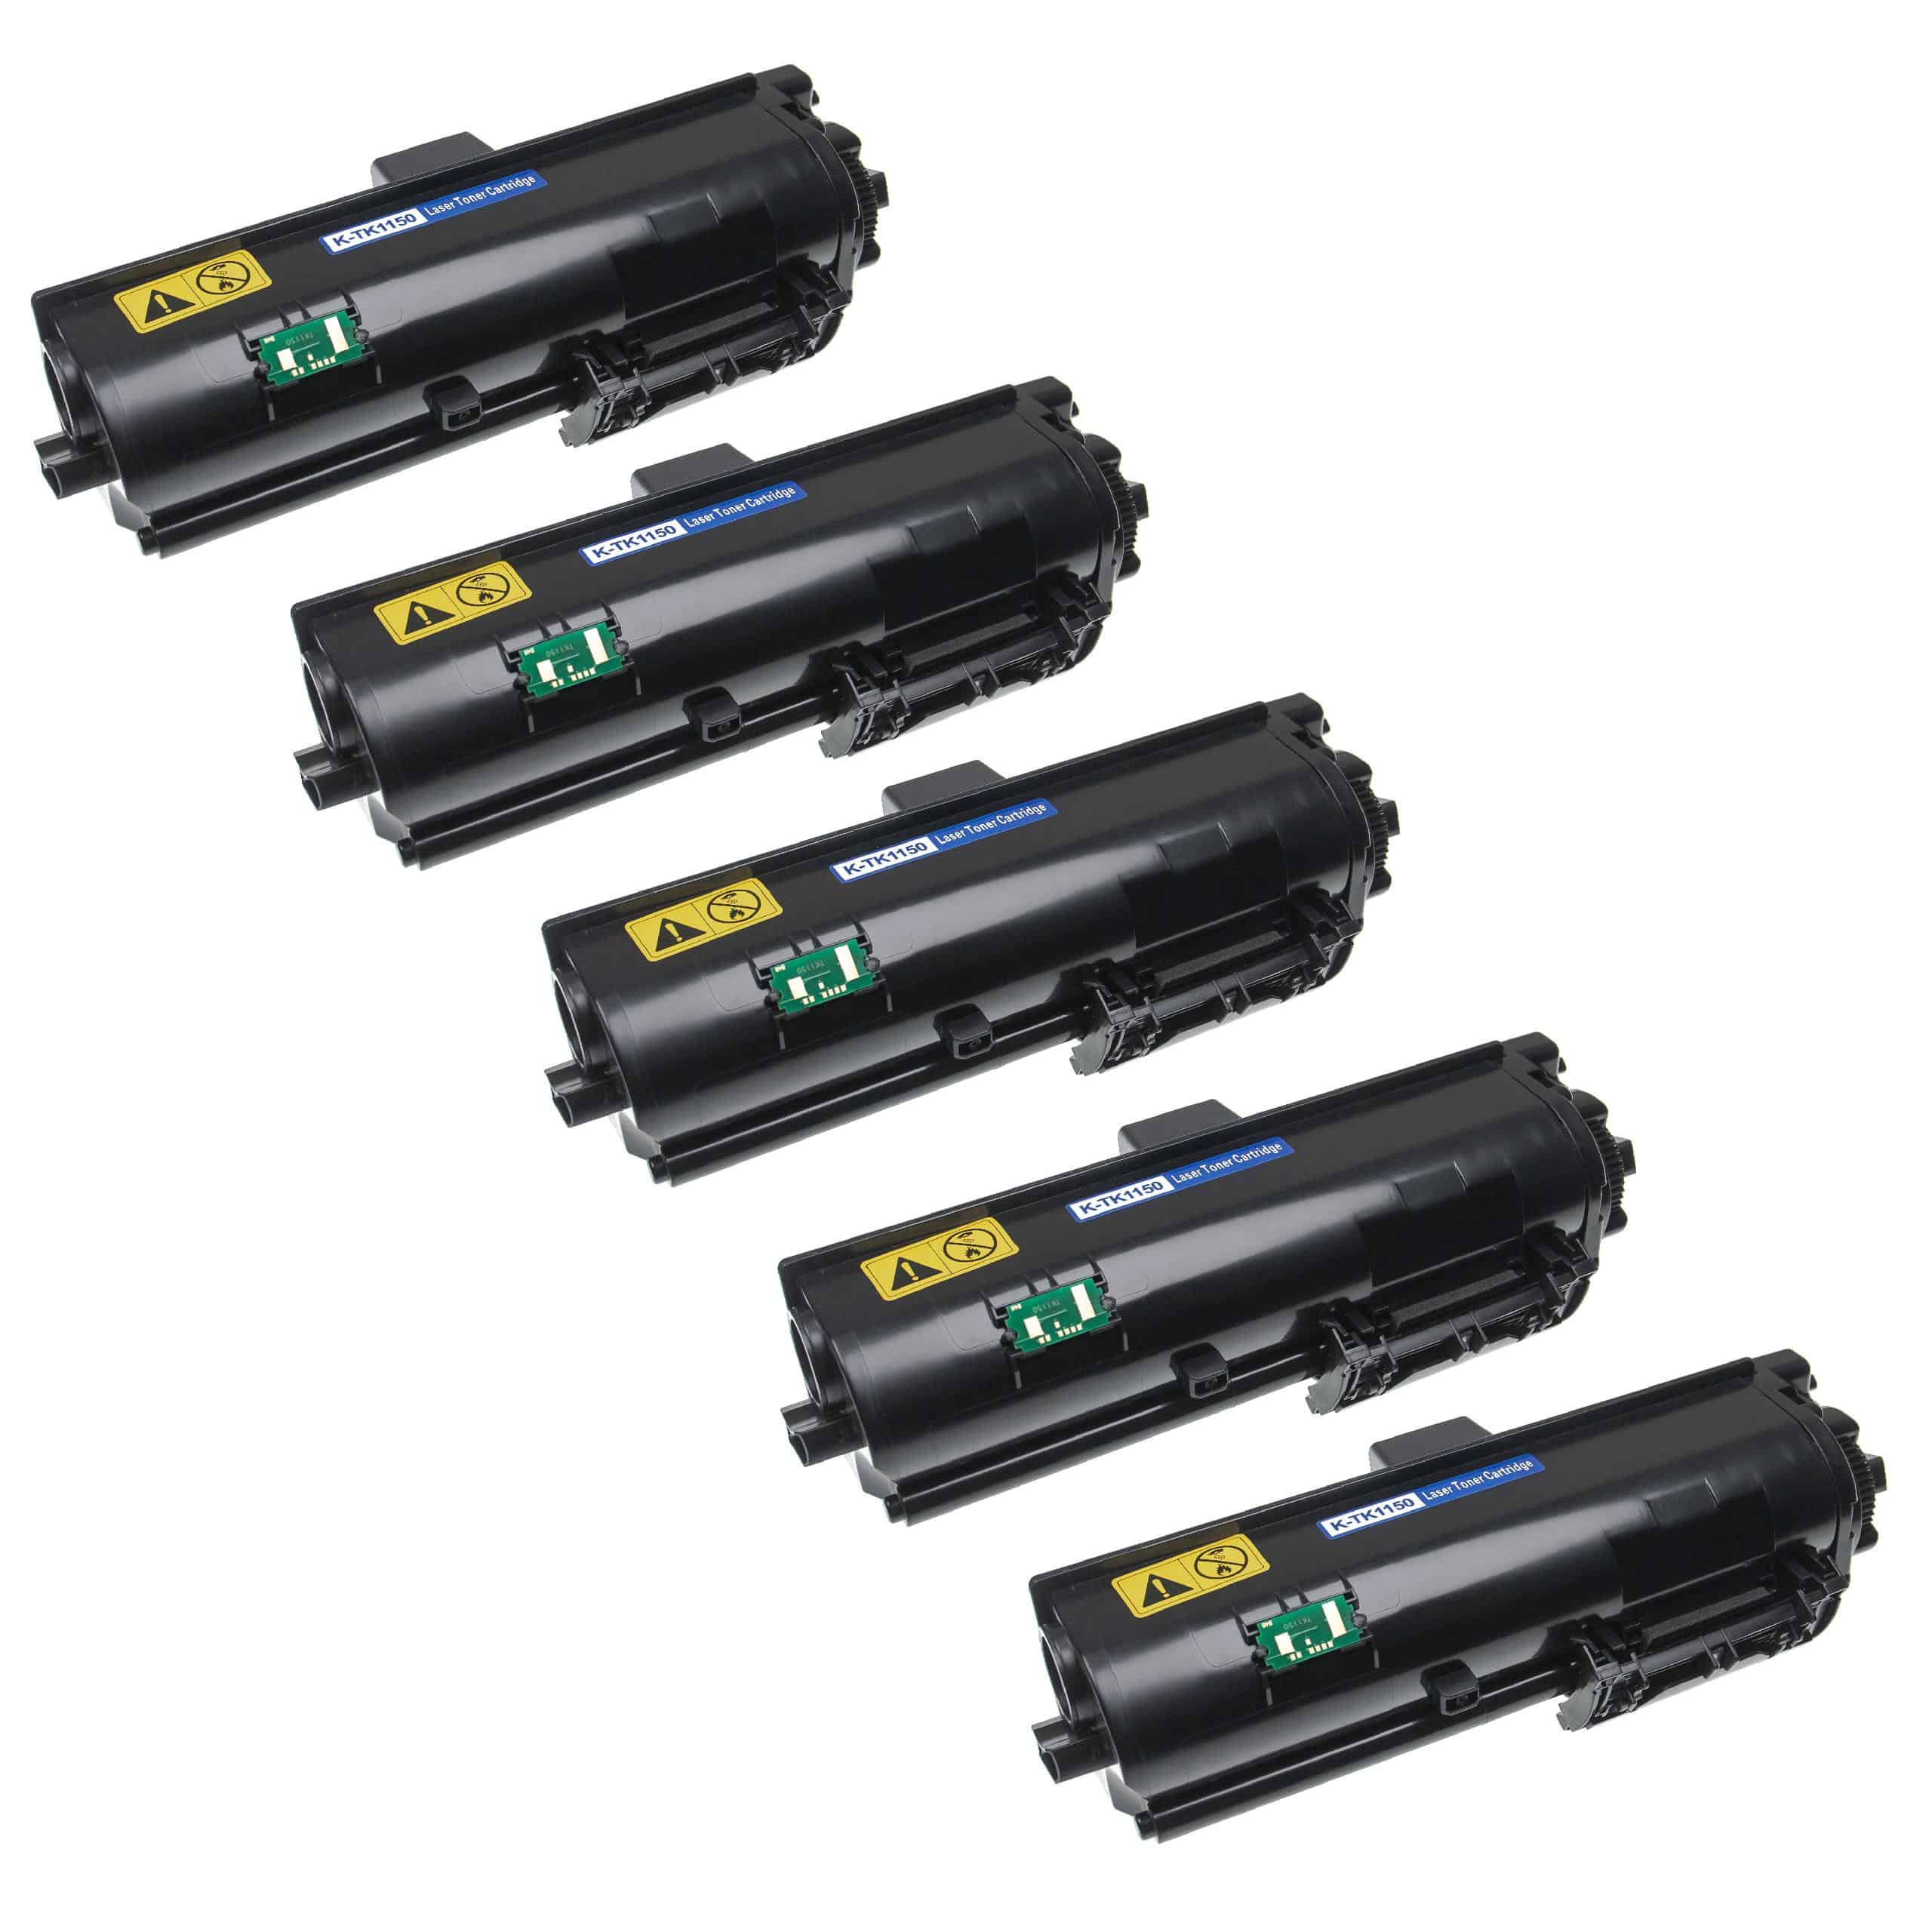 5x Toner replaces Kyocera TK-1150 for Kyocera Printer, Black